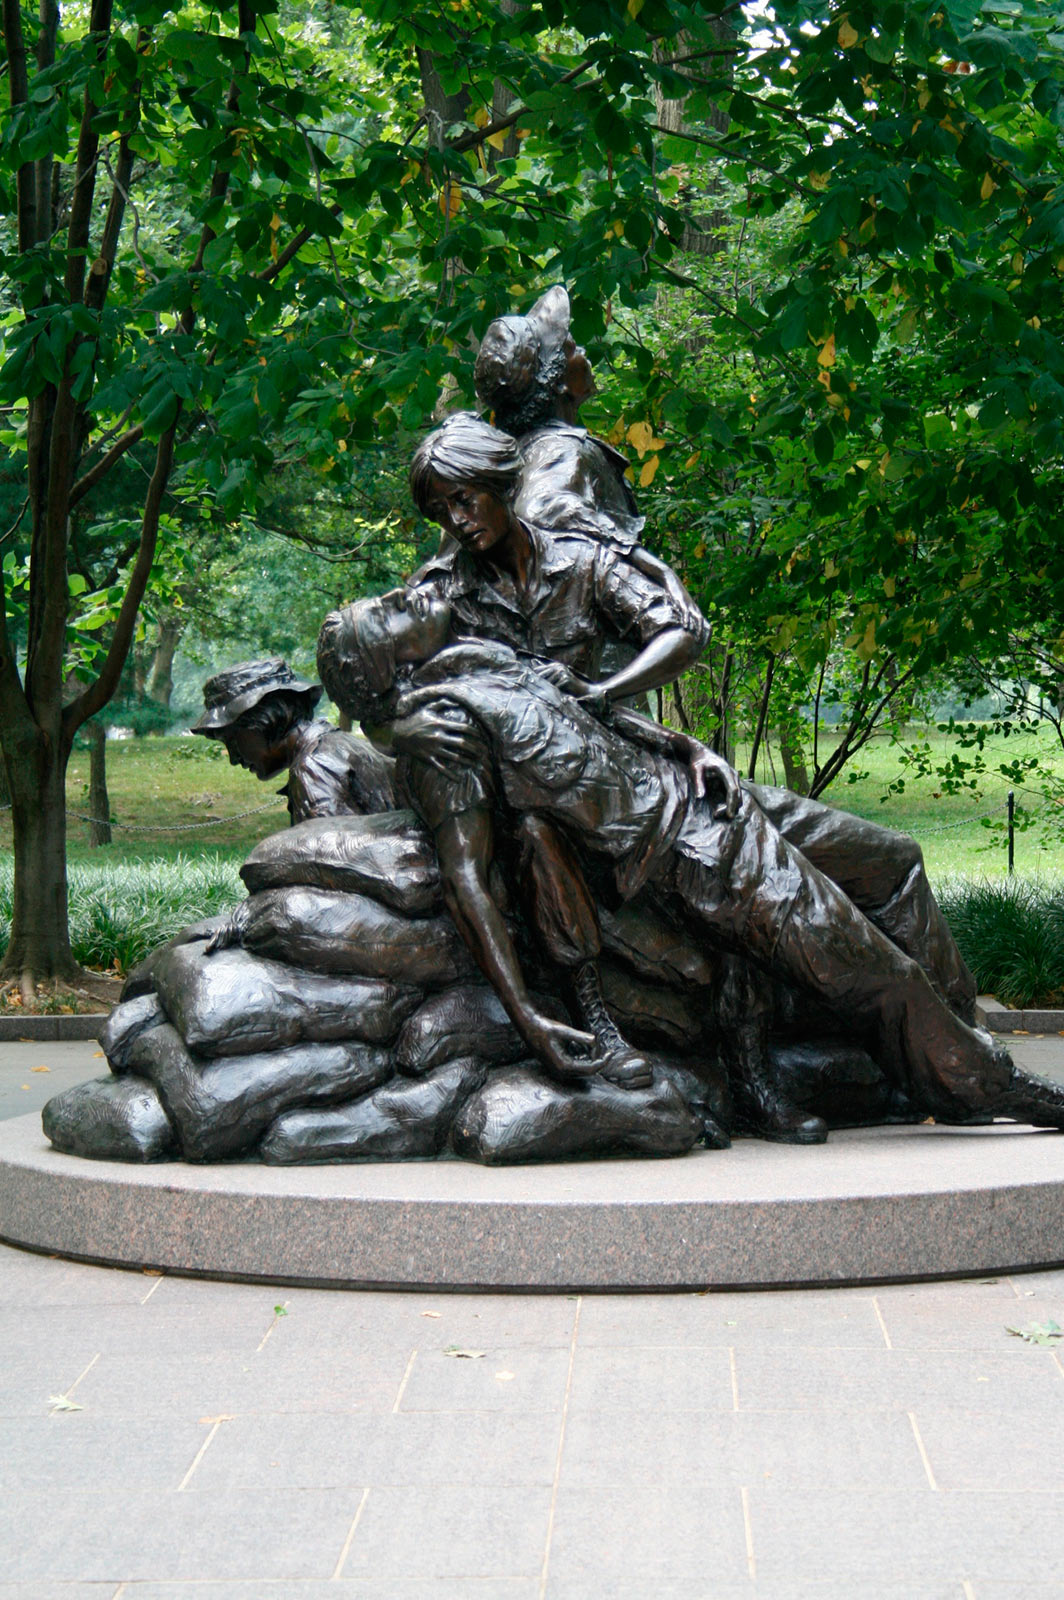 Monumento a las mujeres veteranas de Vietnam - National Mall - Washington, DC